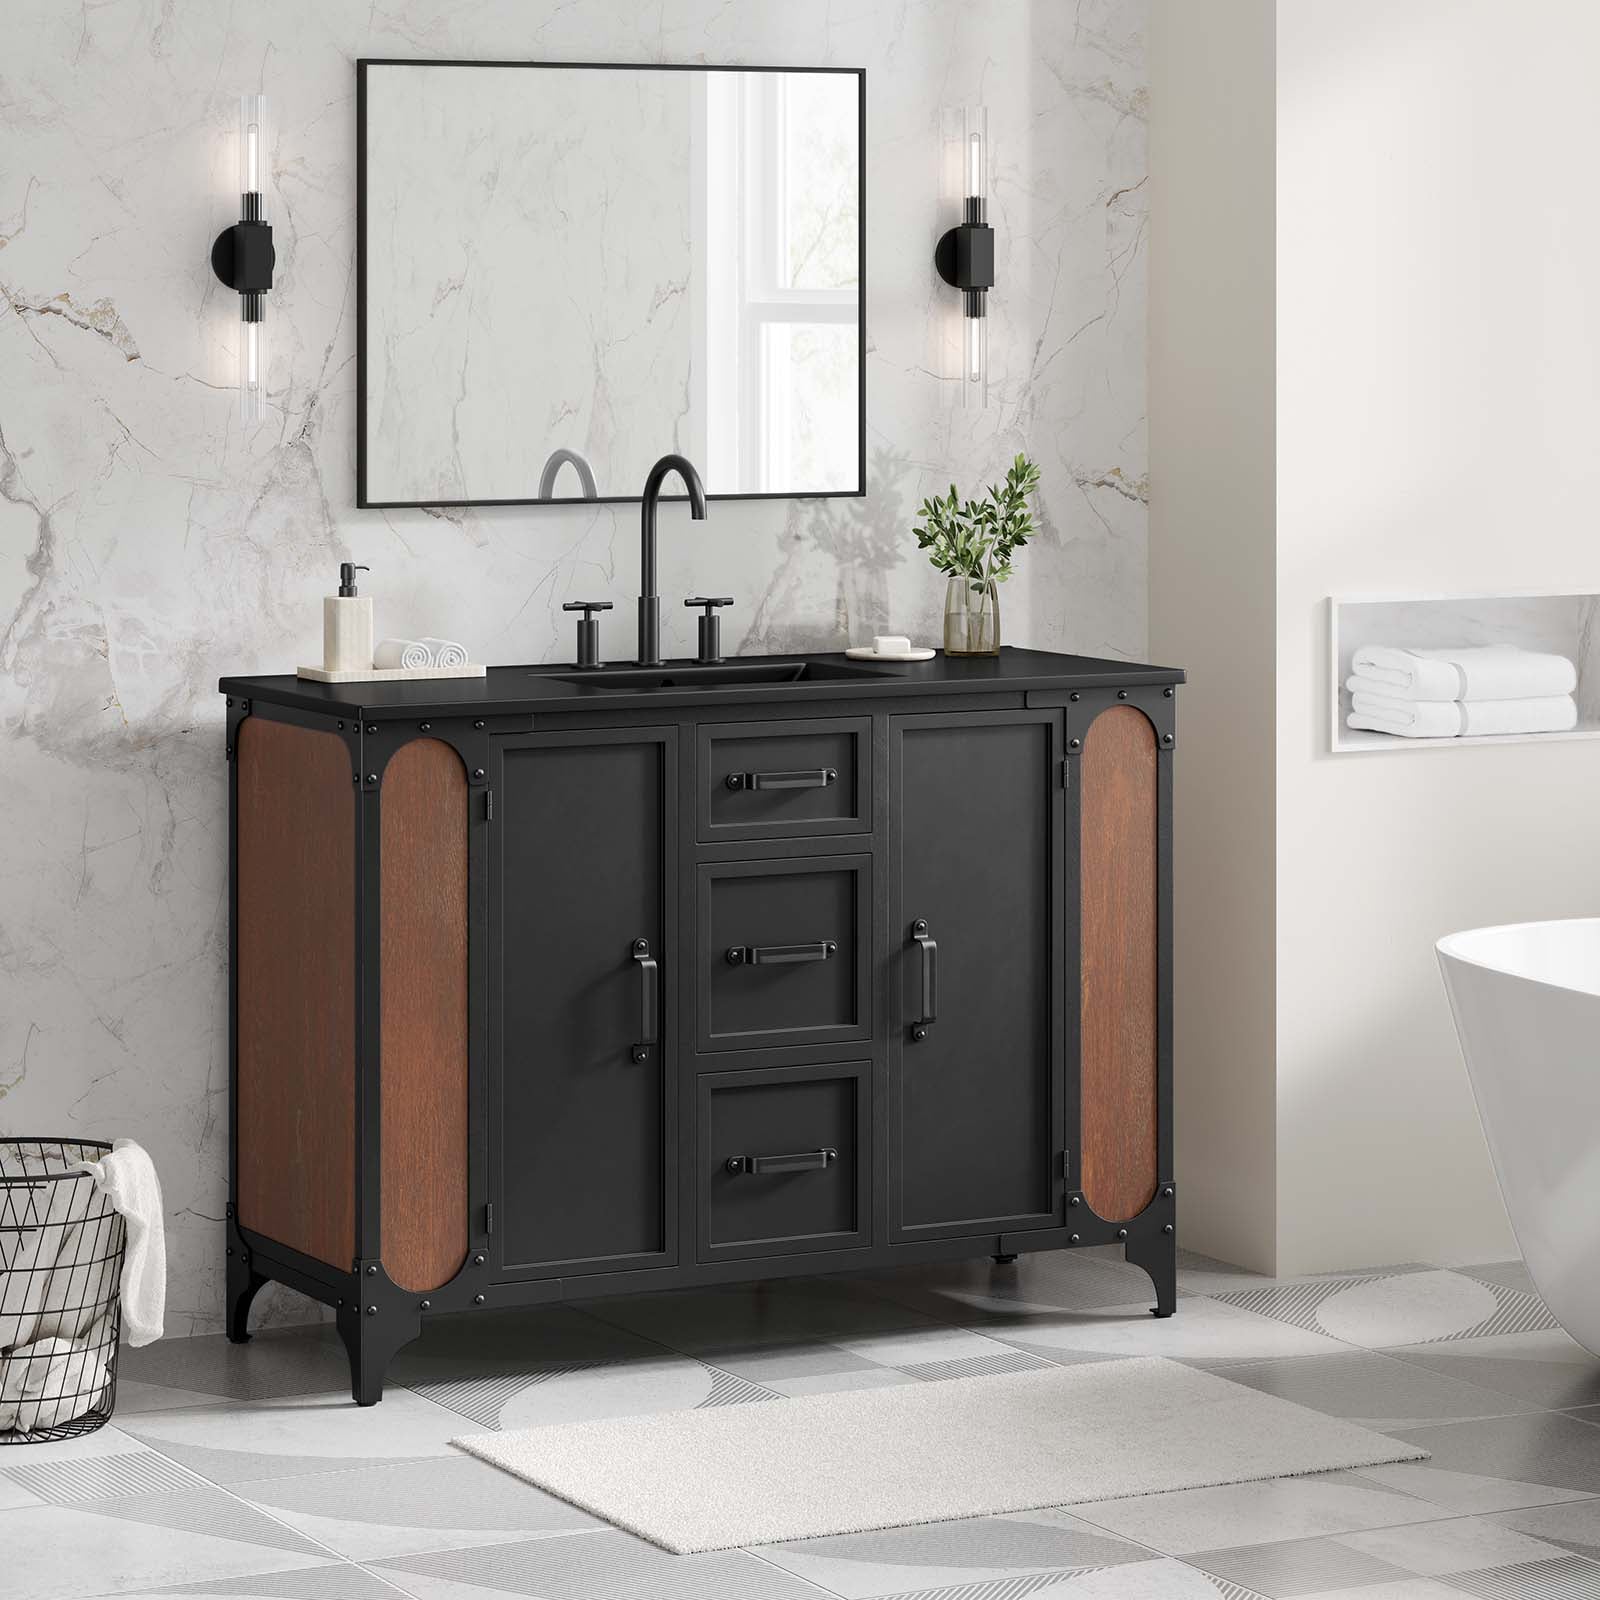 Steamforge 48" Single Sink Bathroom Vanity - East Shore Modern Home Furnishings